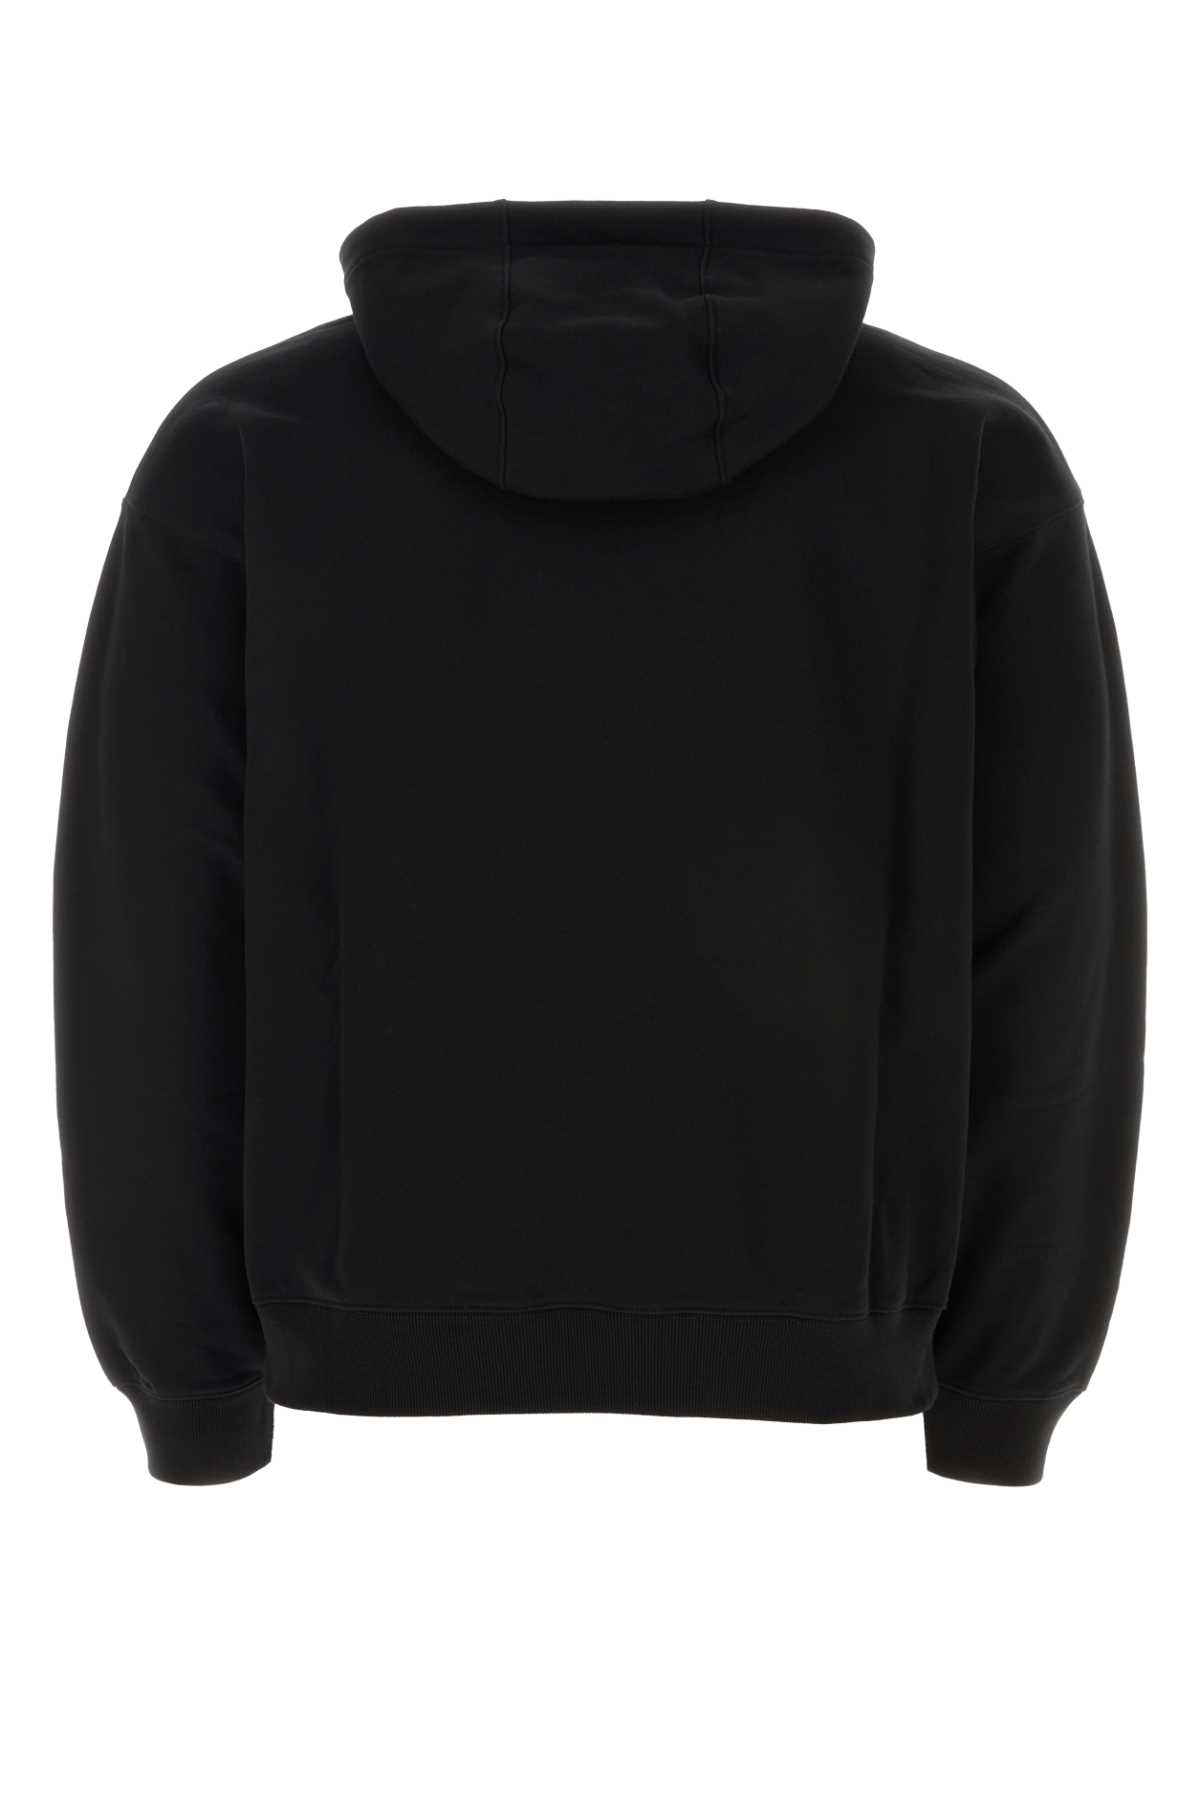 Shop Versace Black Cotton Sweatshirt